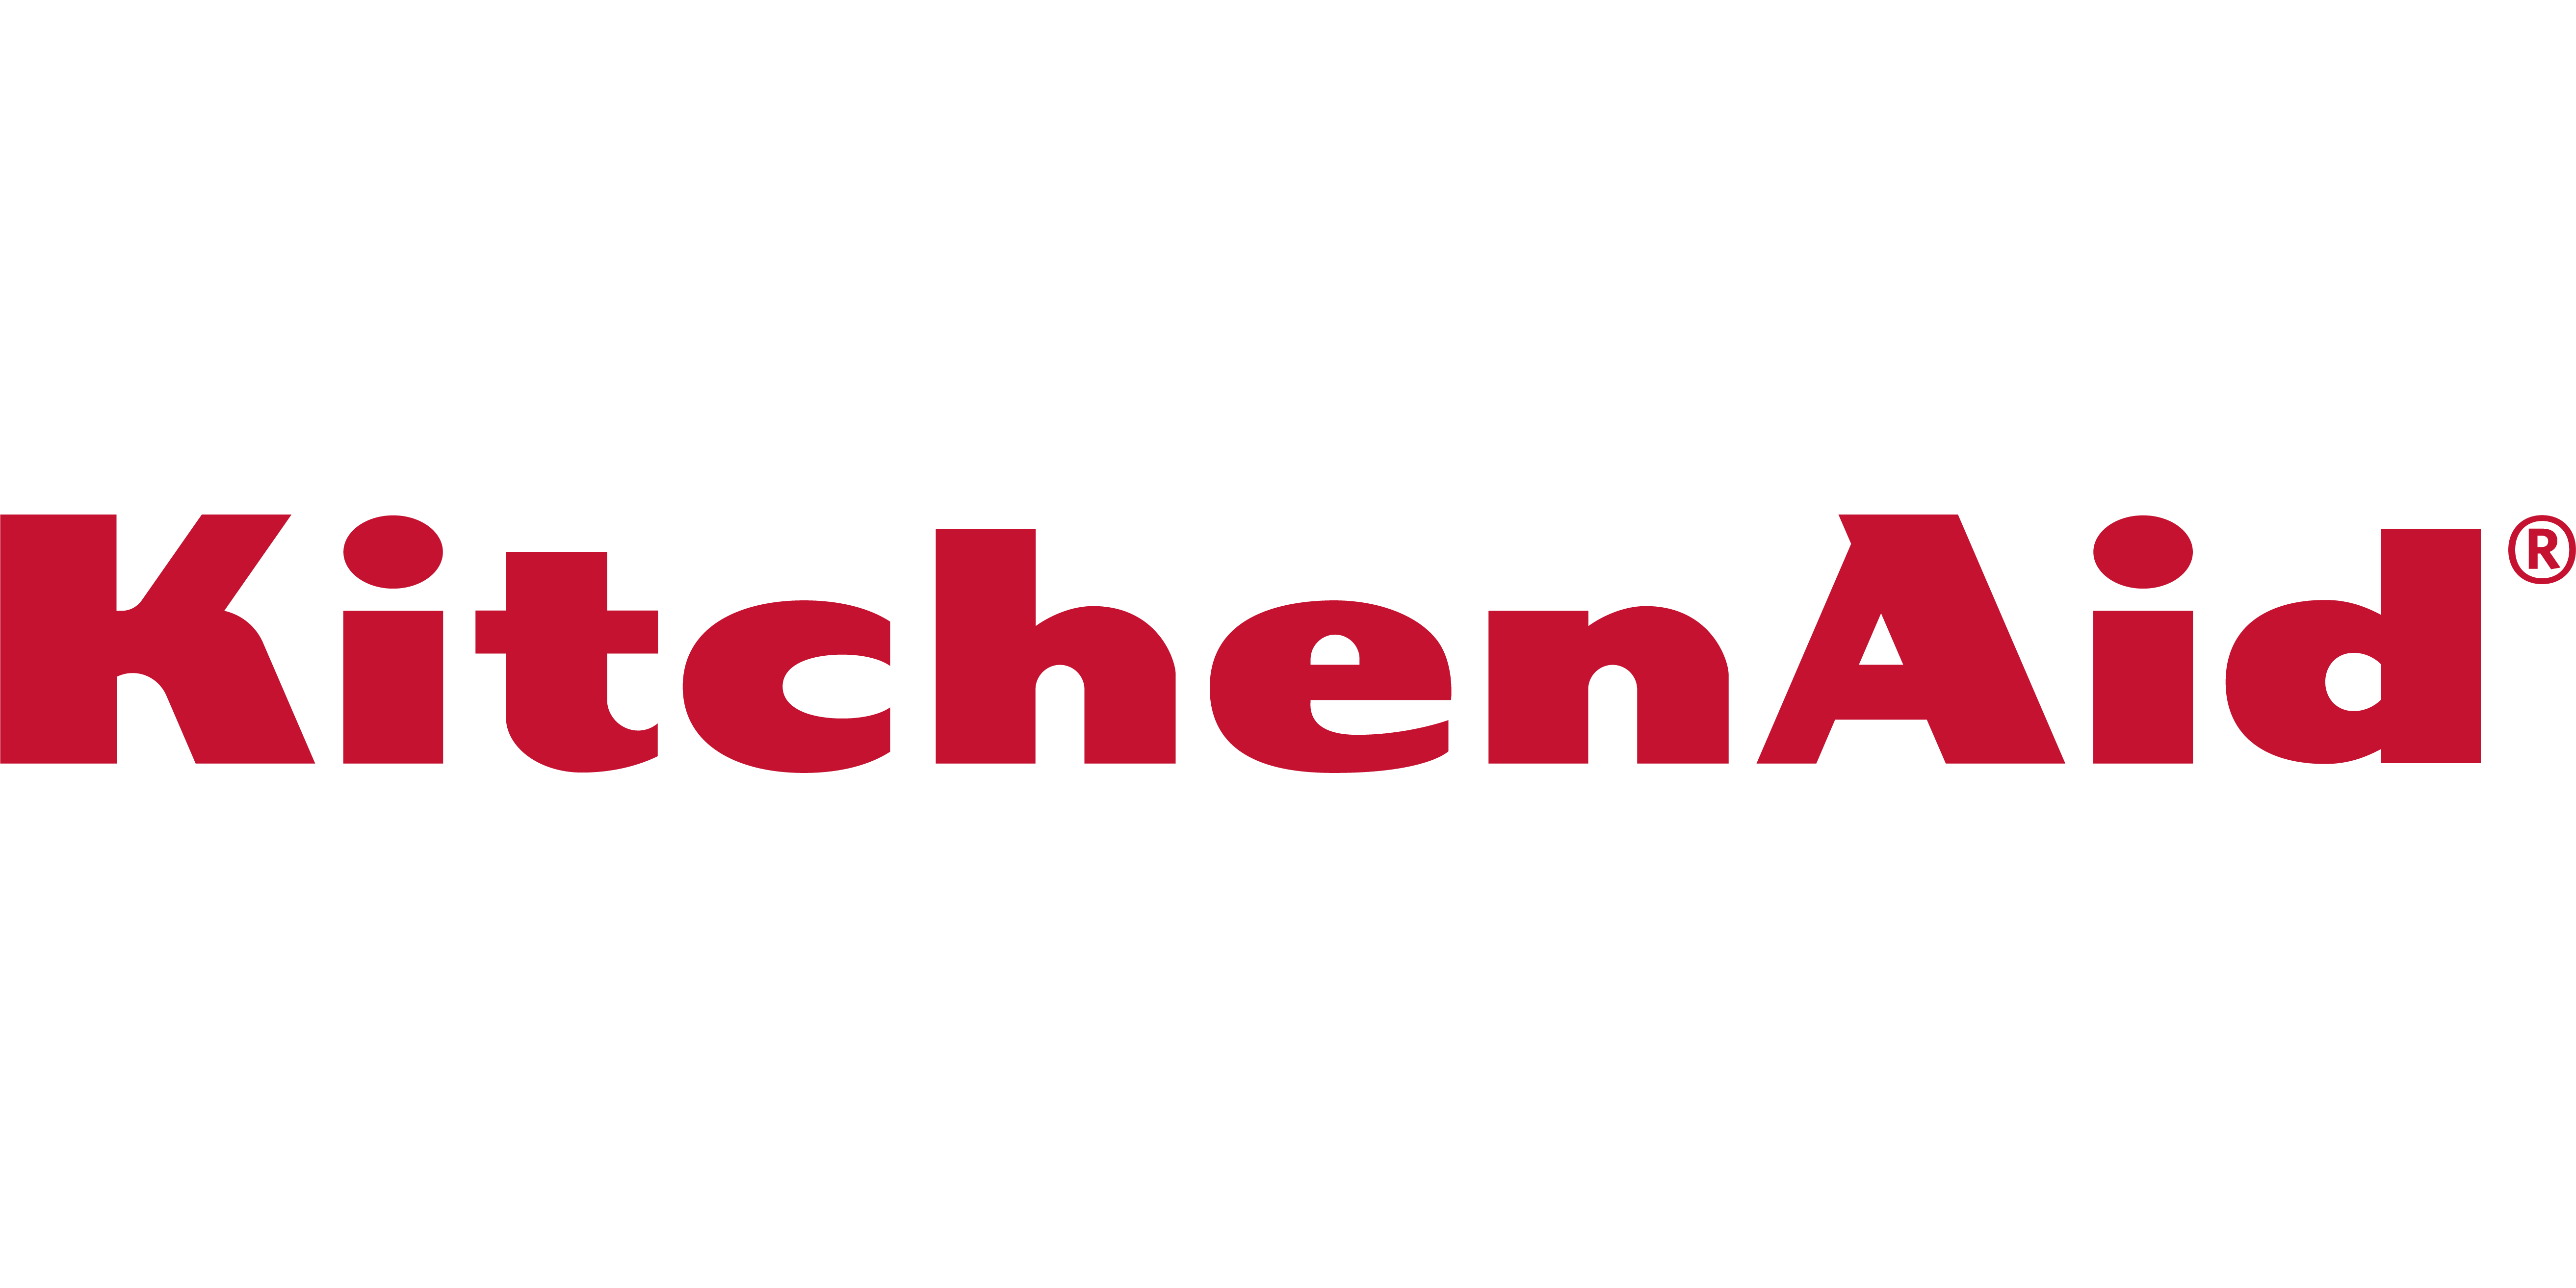 The KitchenAid logo